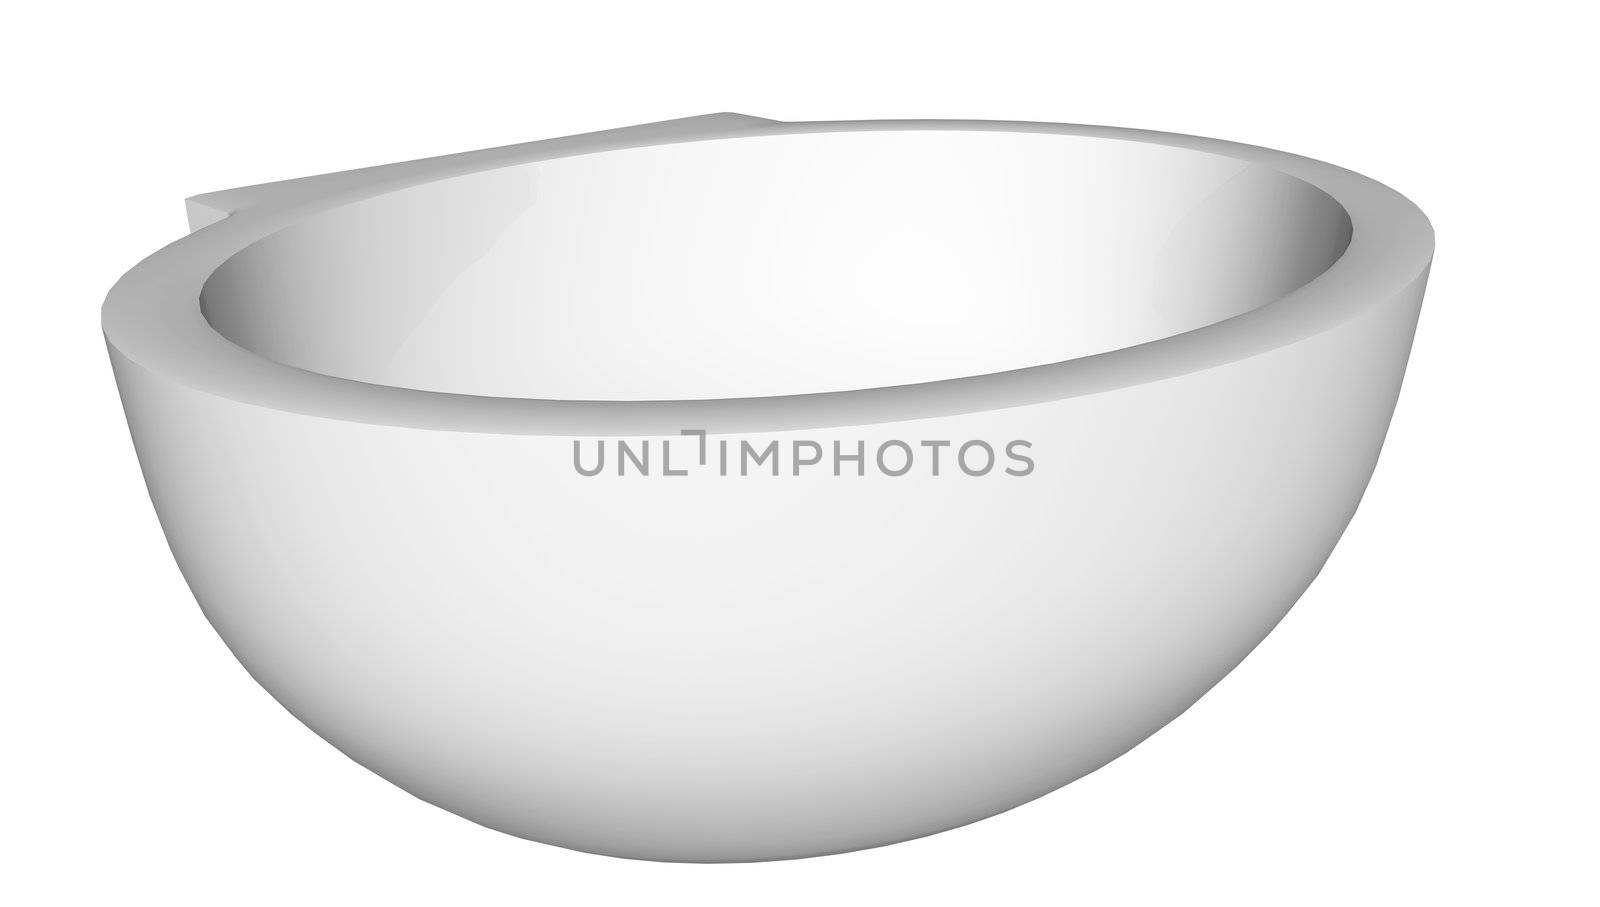 Modern egg-shaped washbasin or sink by Morphart